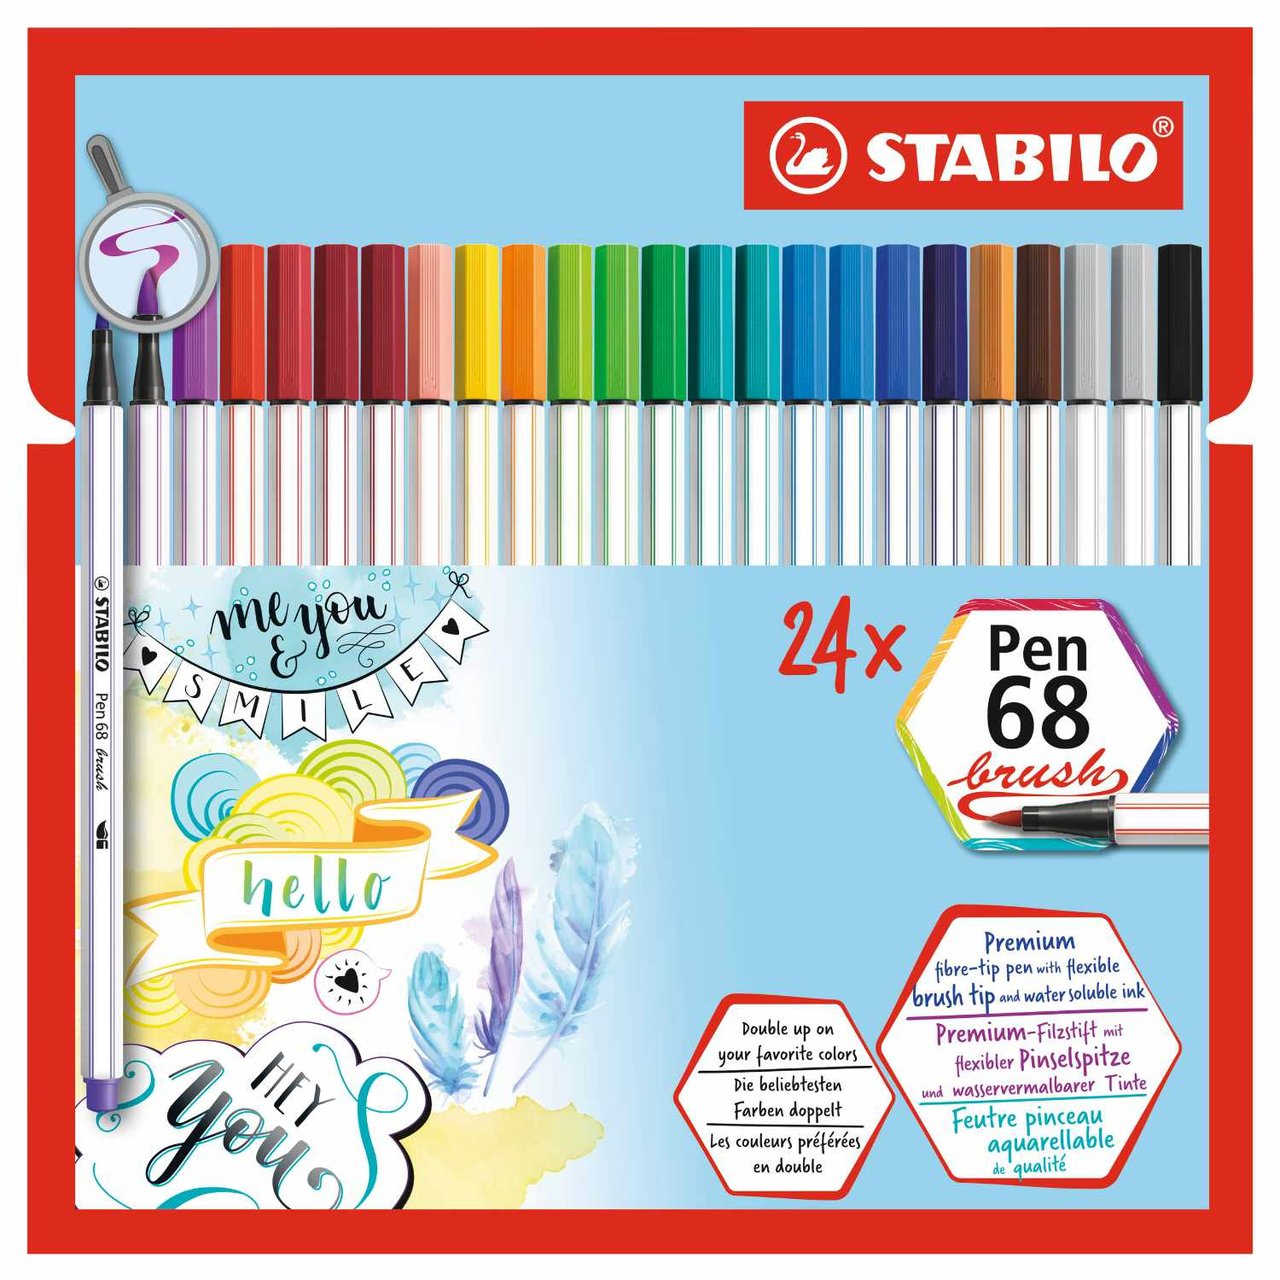 STABILO Pen 68 Brush im Kartonetui ohne Neonfarben 24 Farben